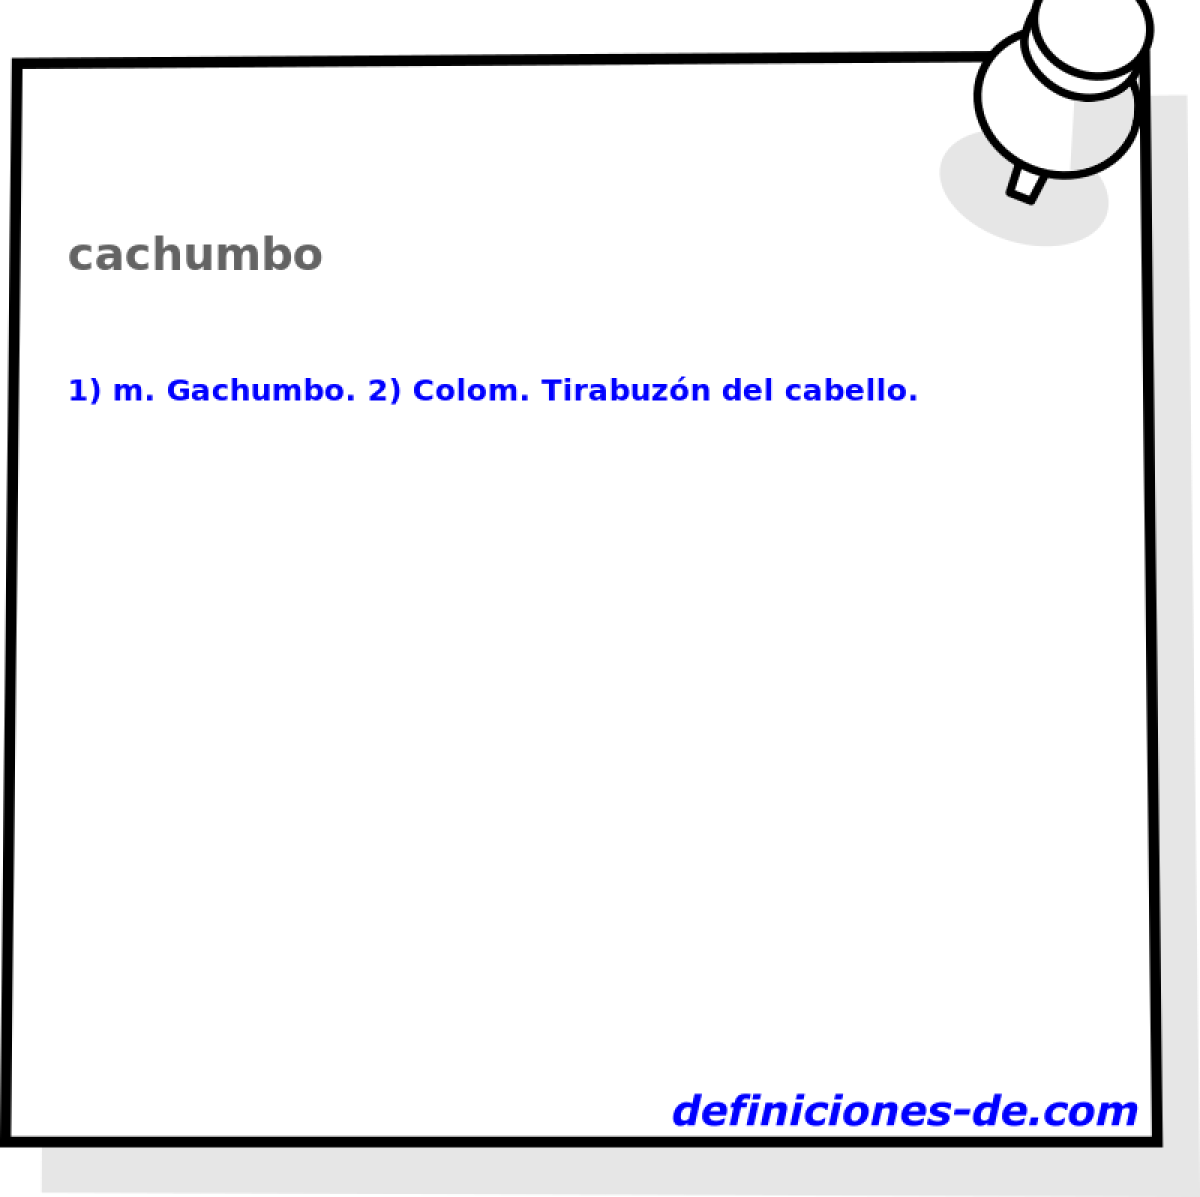 cachumbo 